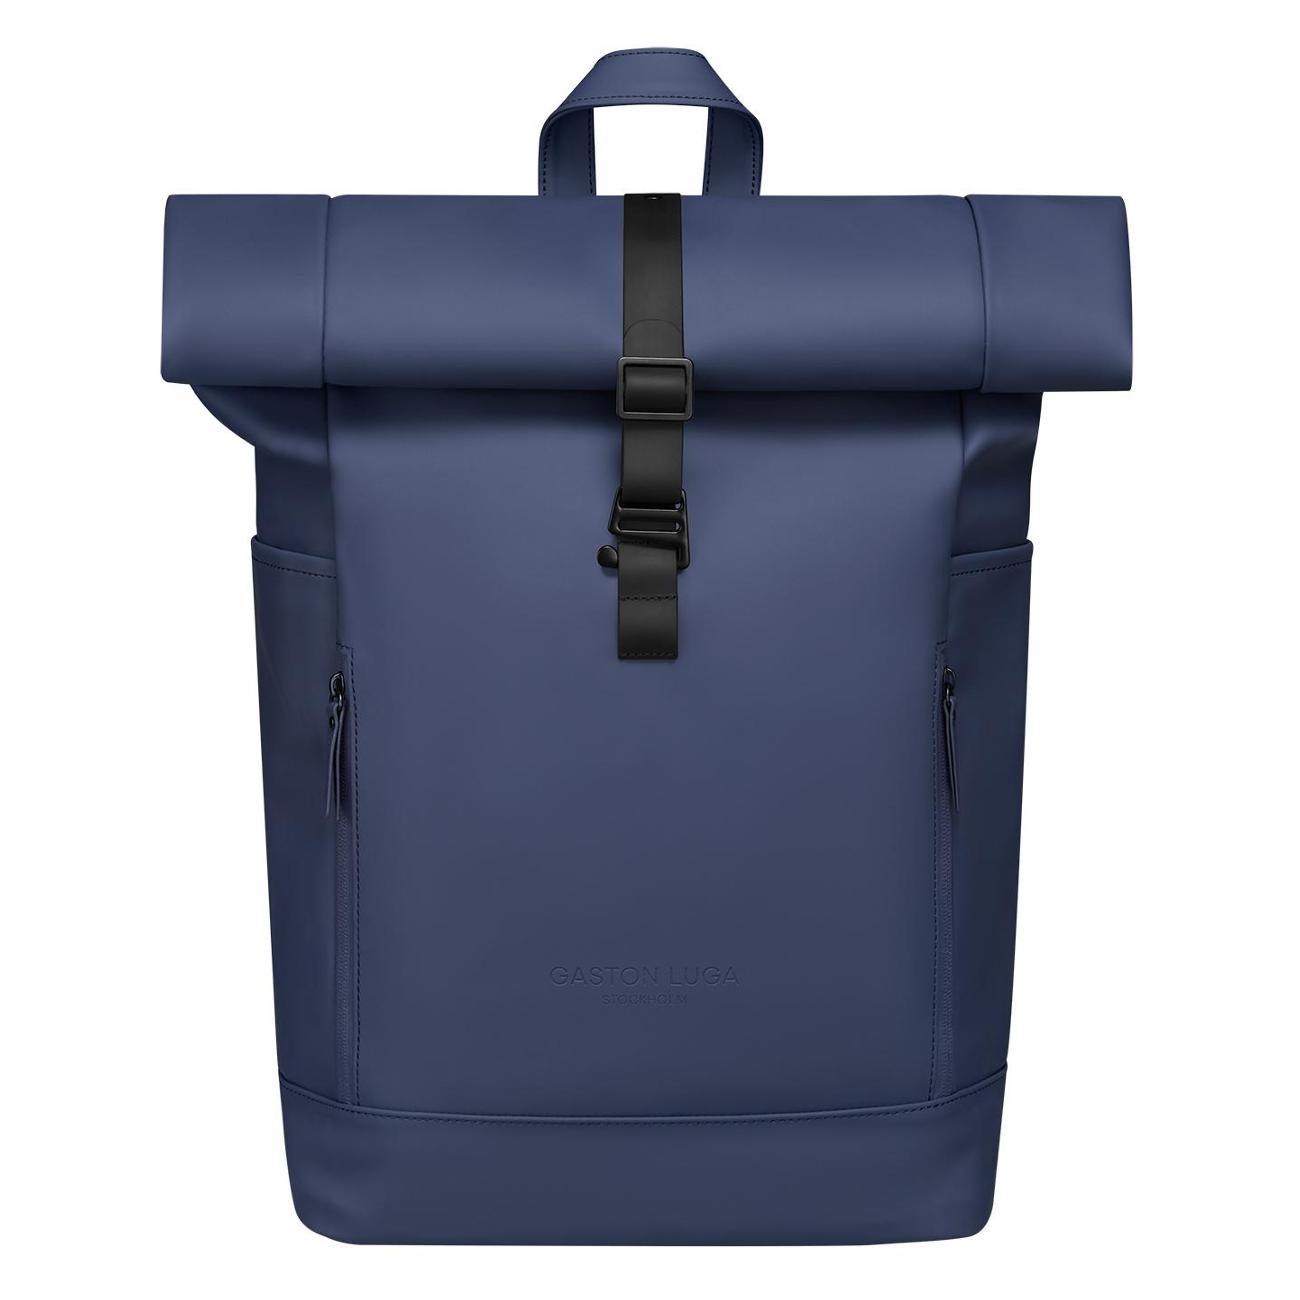 16" Рюкзак Gaston Luga Rullen 16", темно-синий (GL9005)